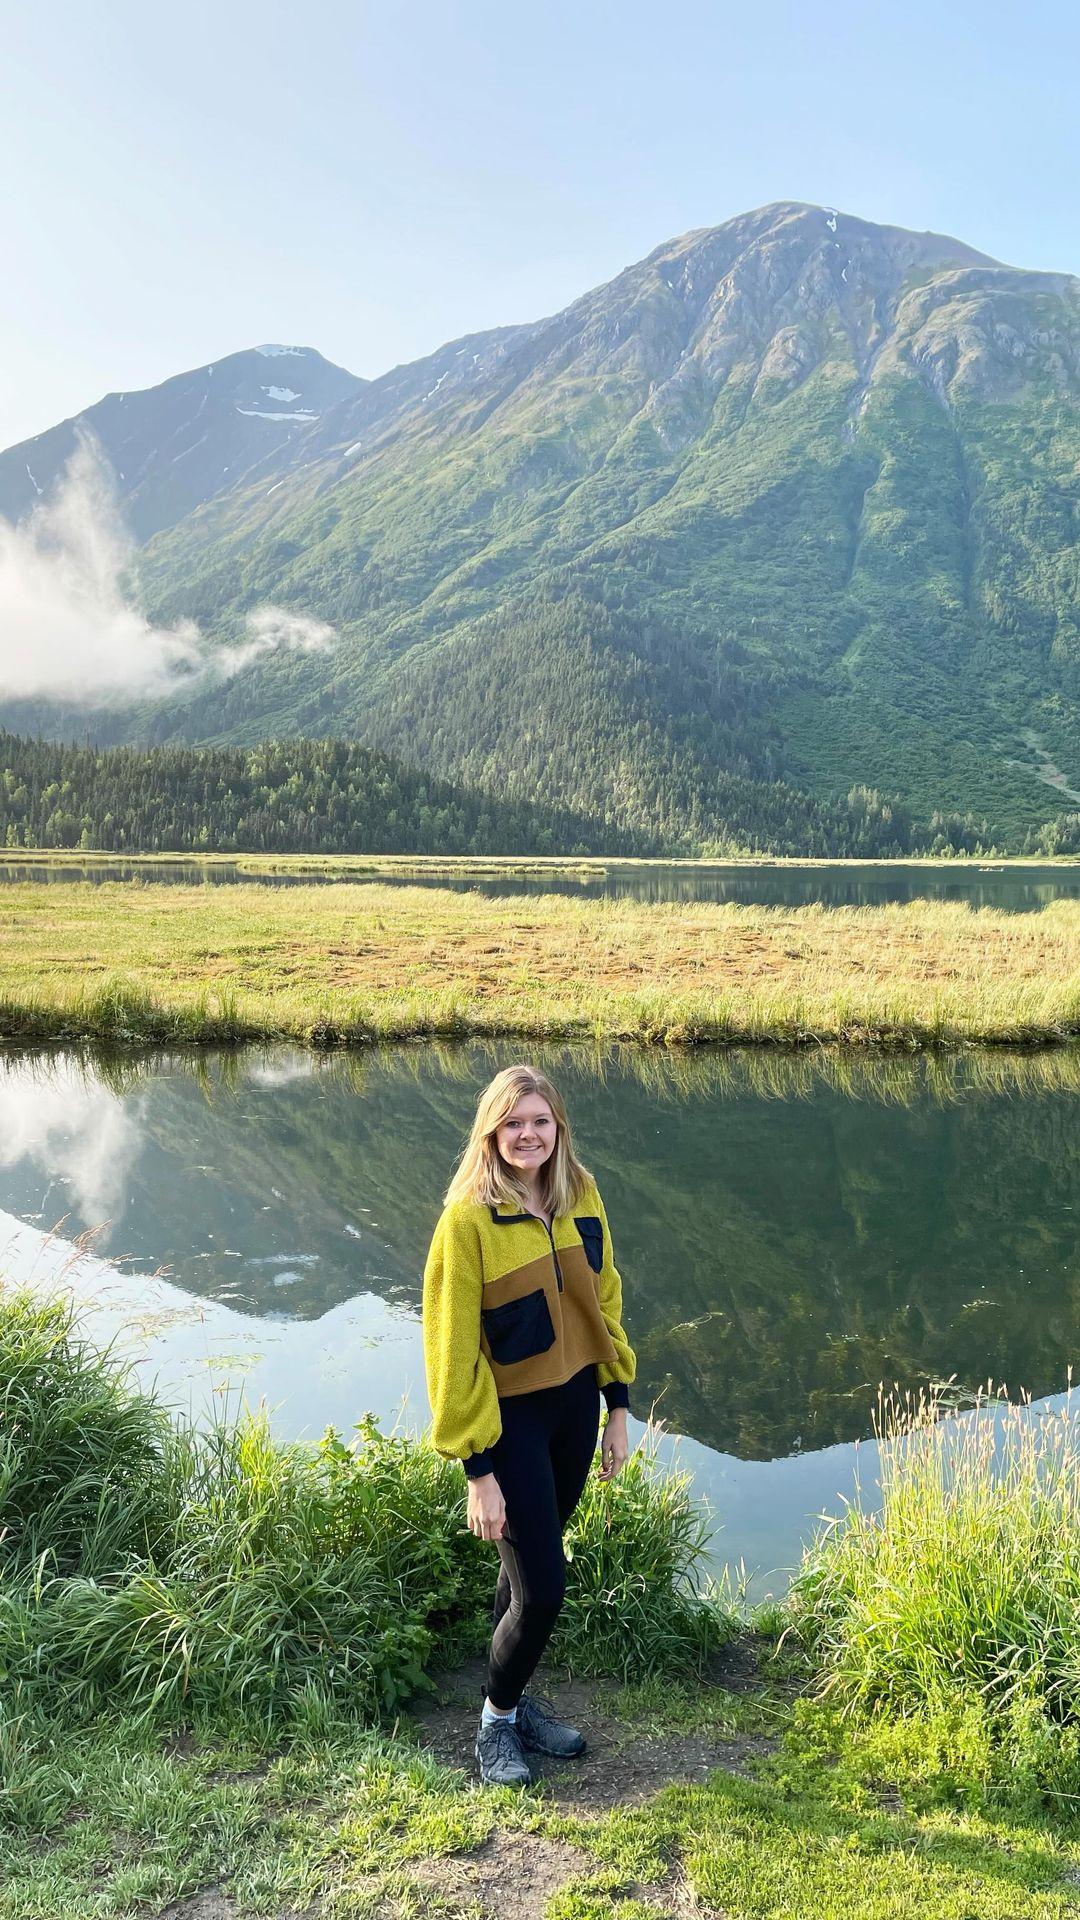 Do you have dreams of visiting Alaska?